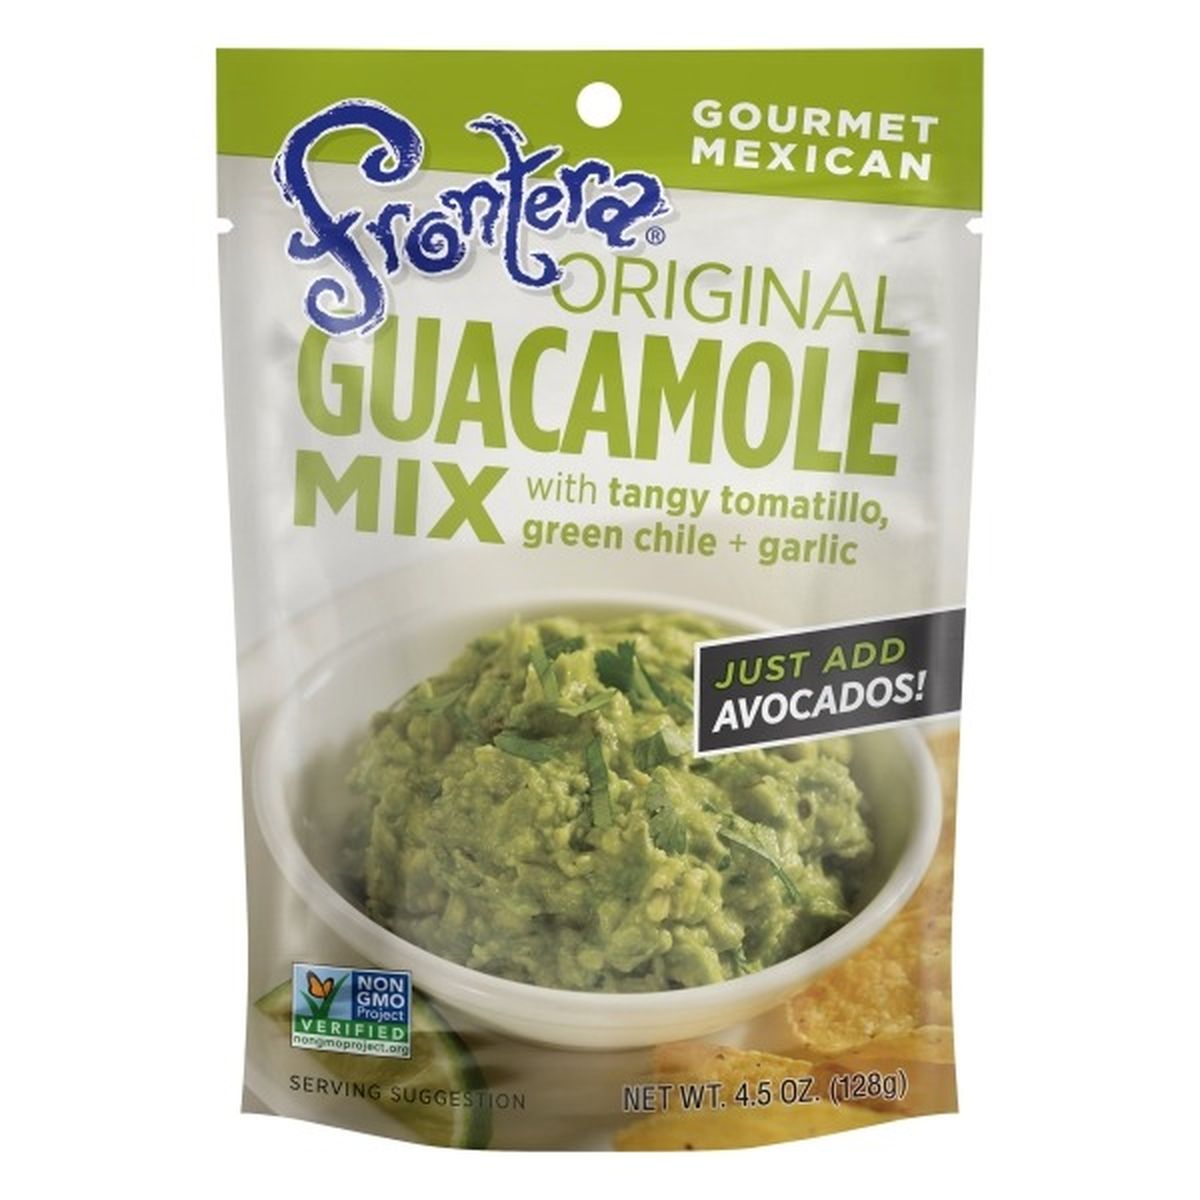 Calories in Frontera Guacamole Mix, Original